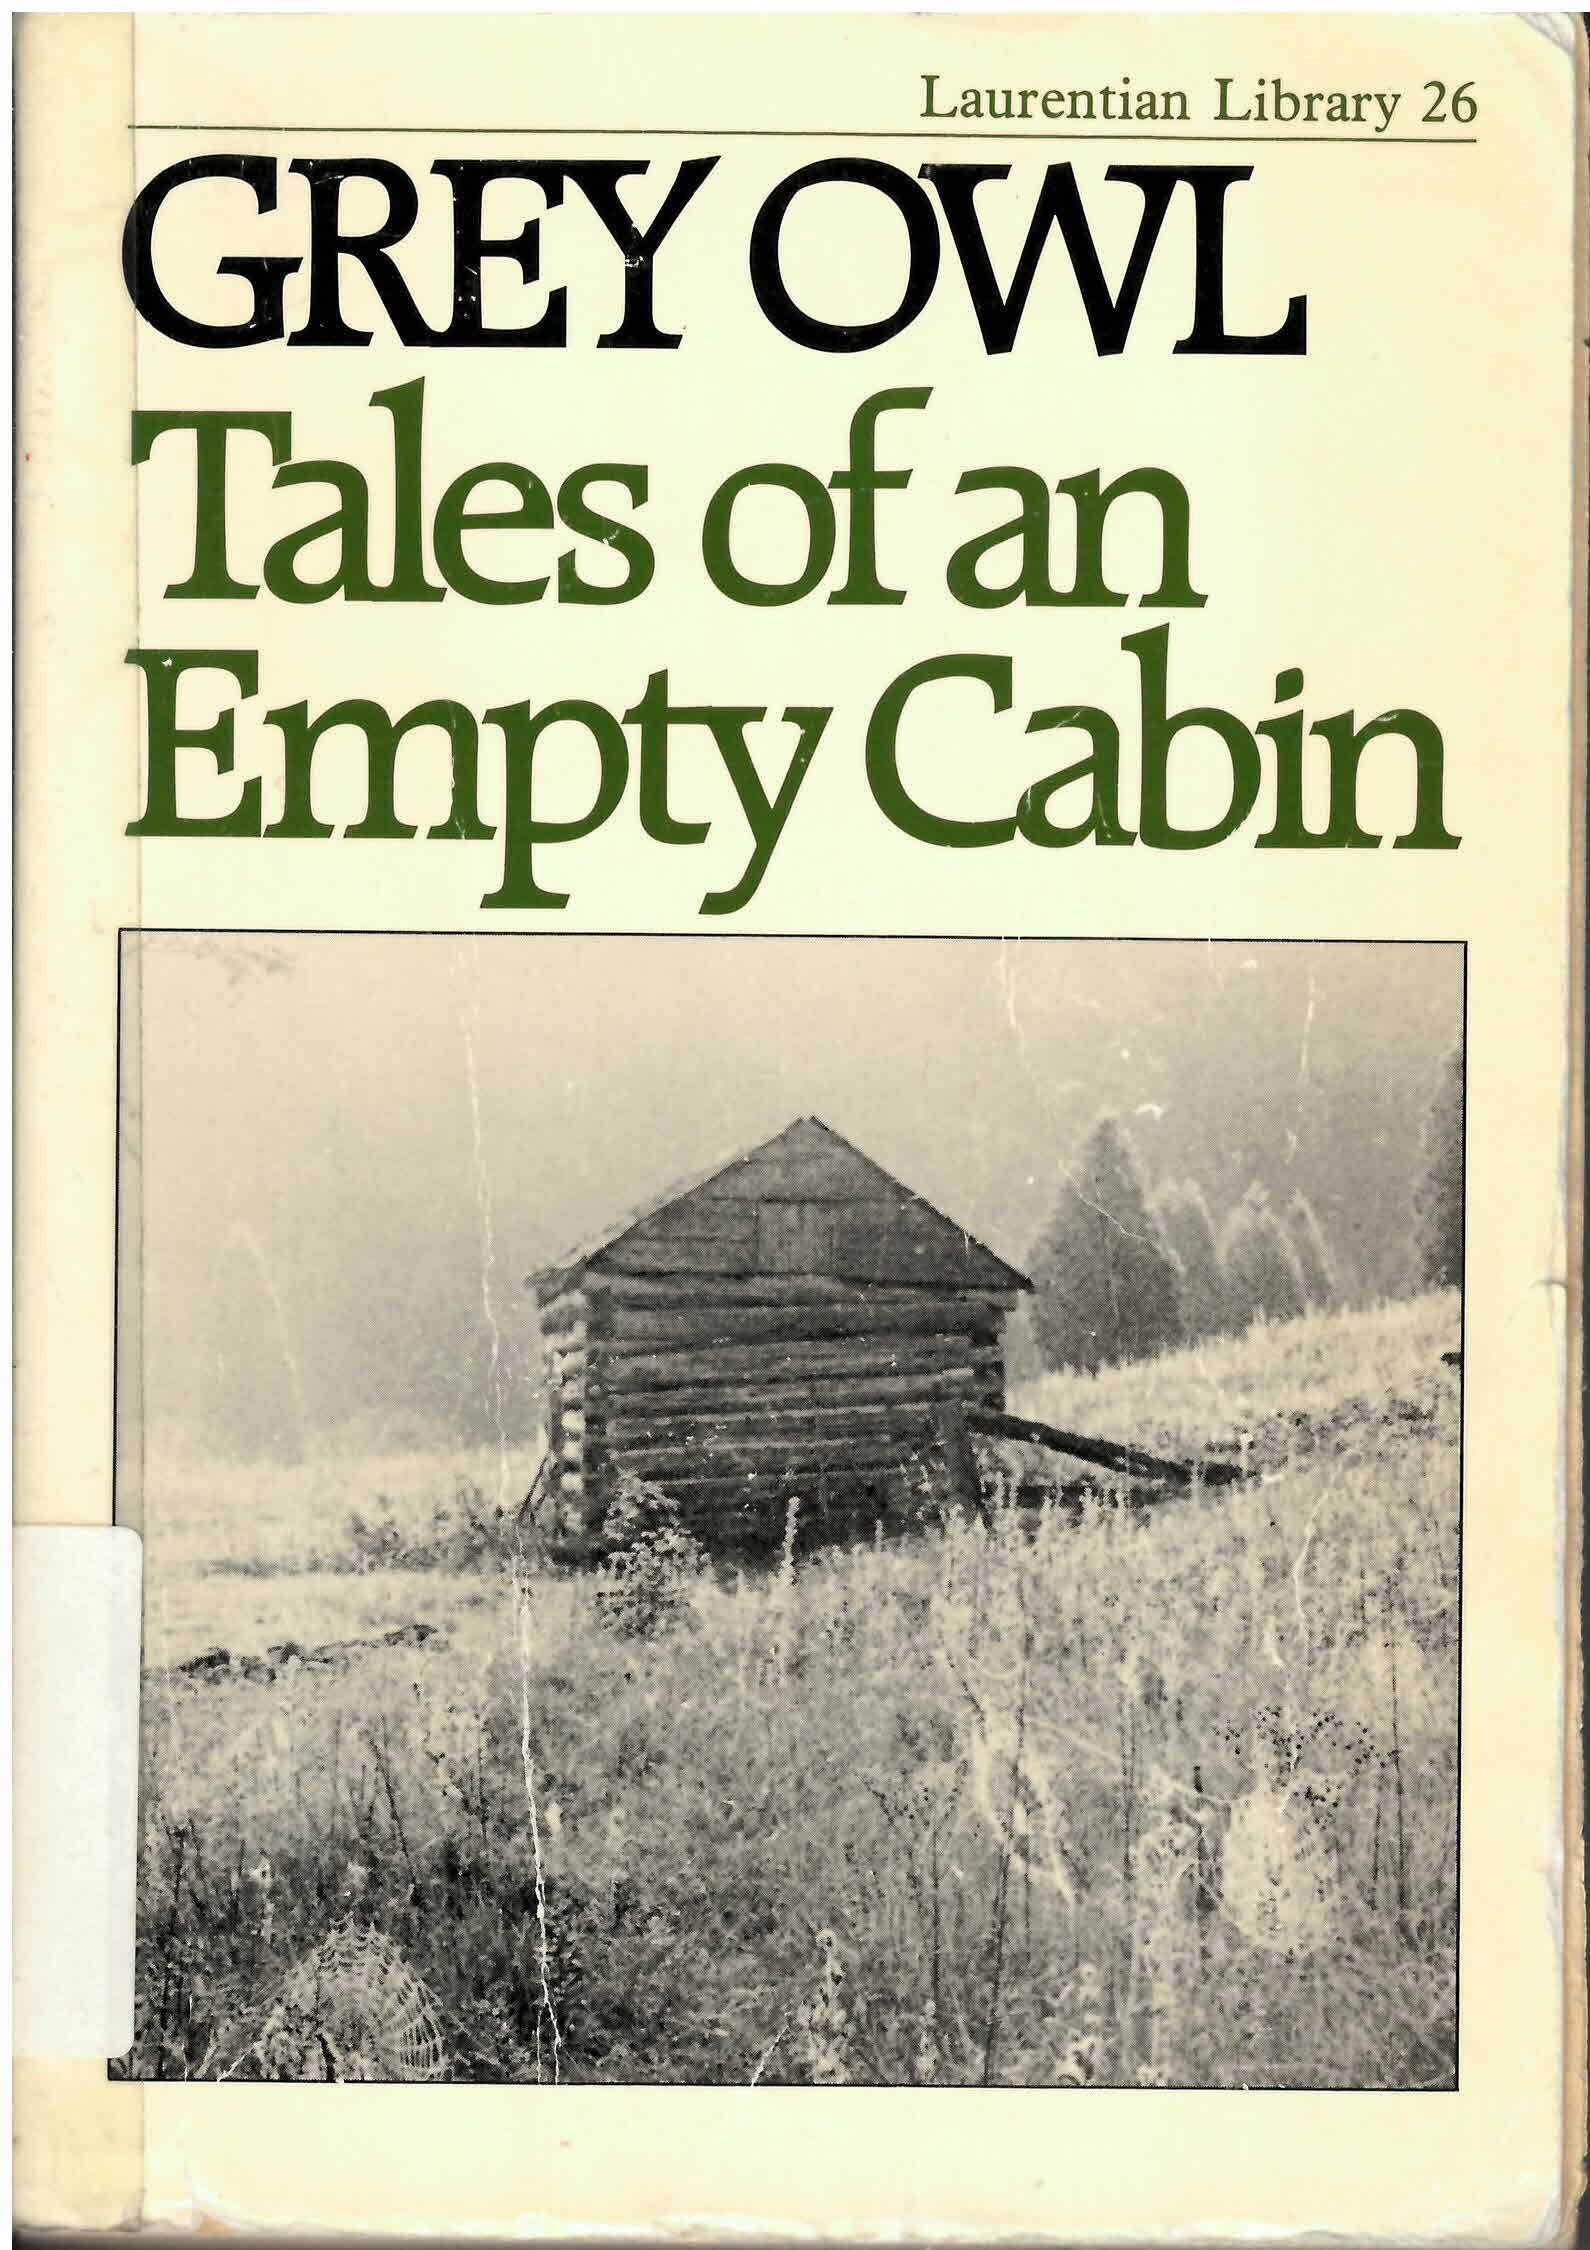 Tales of an empty cabin